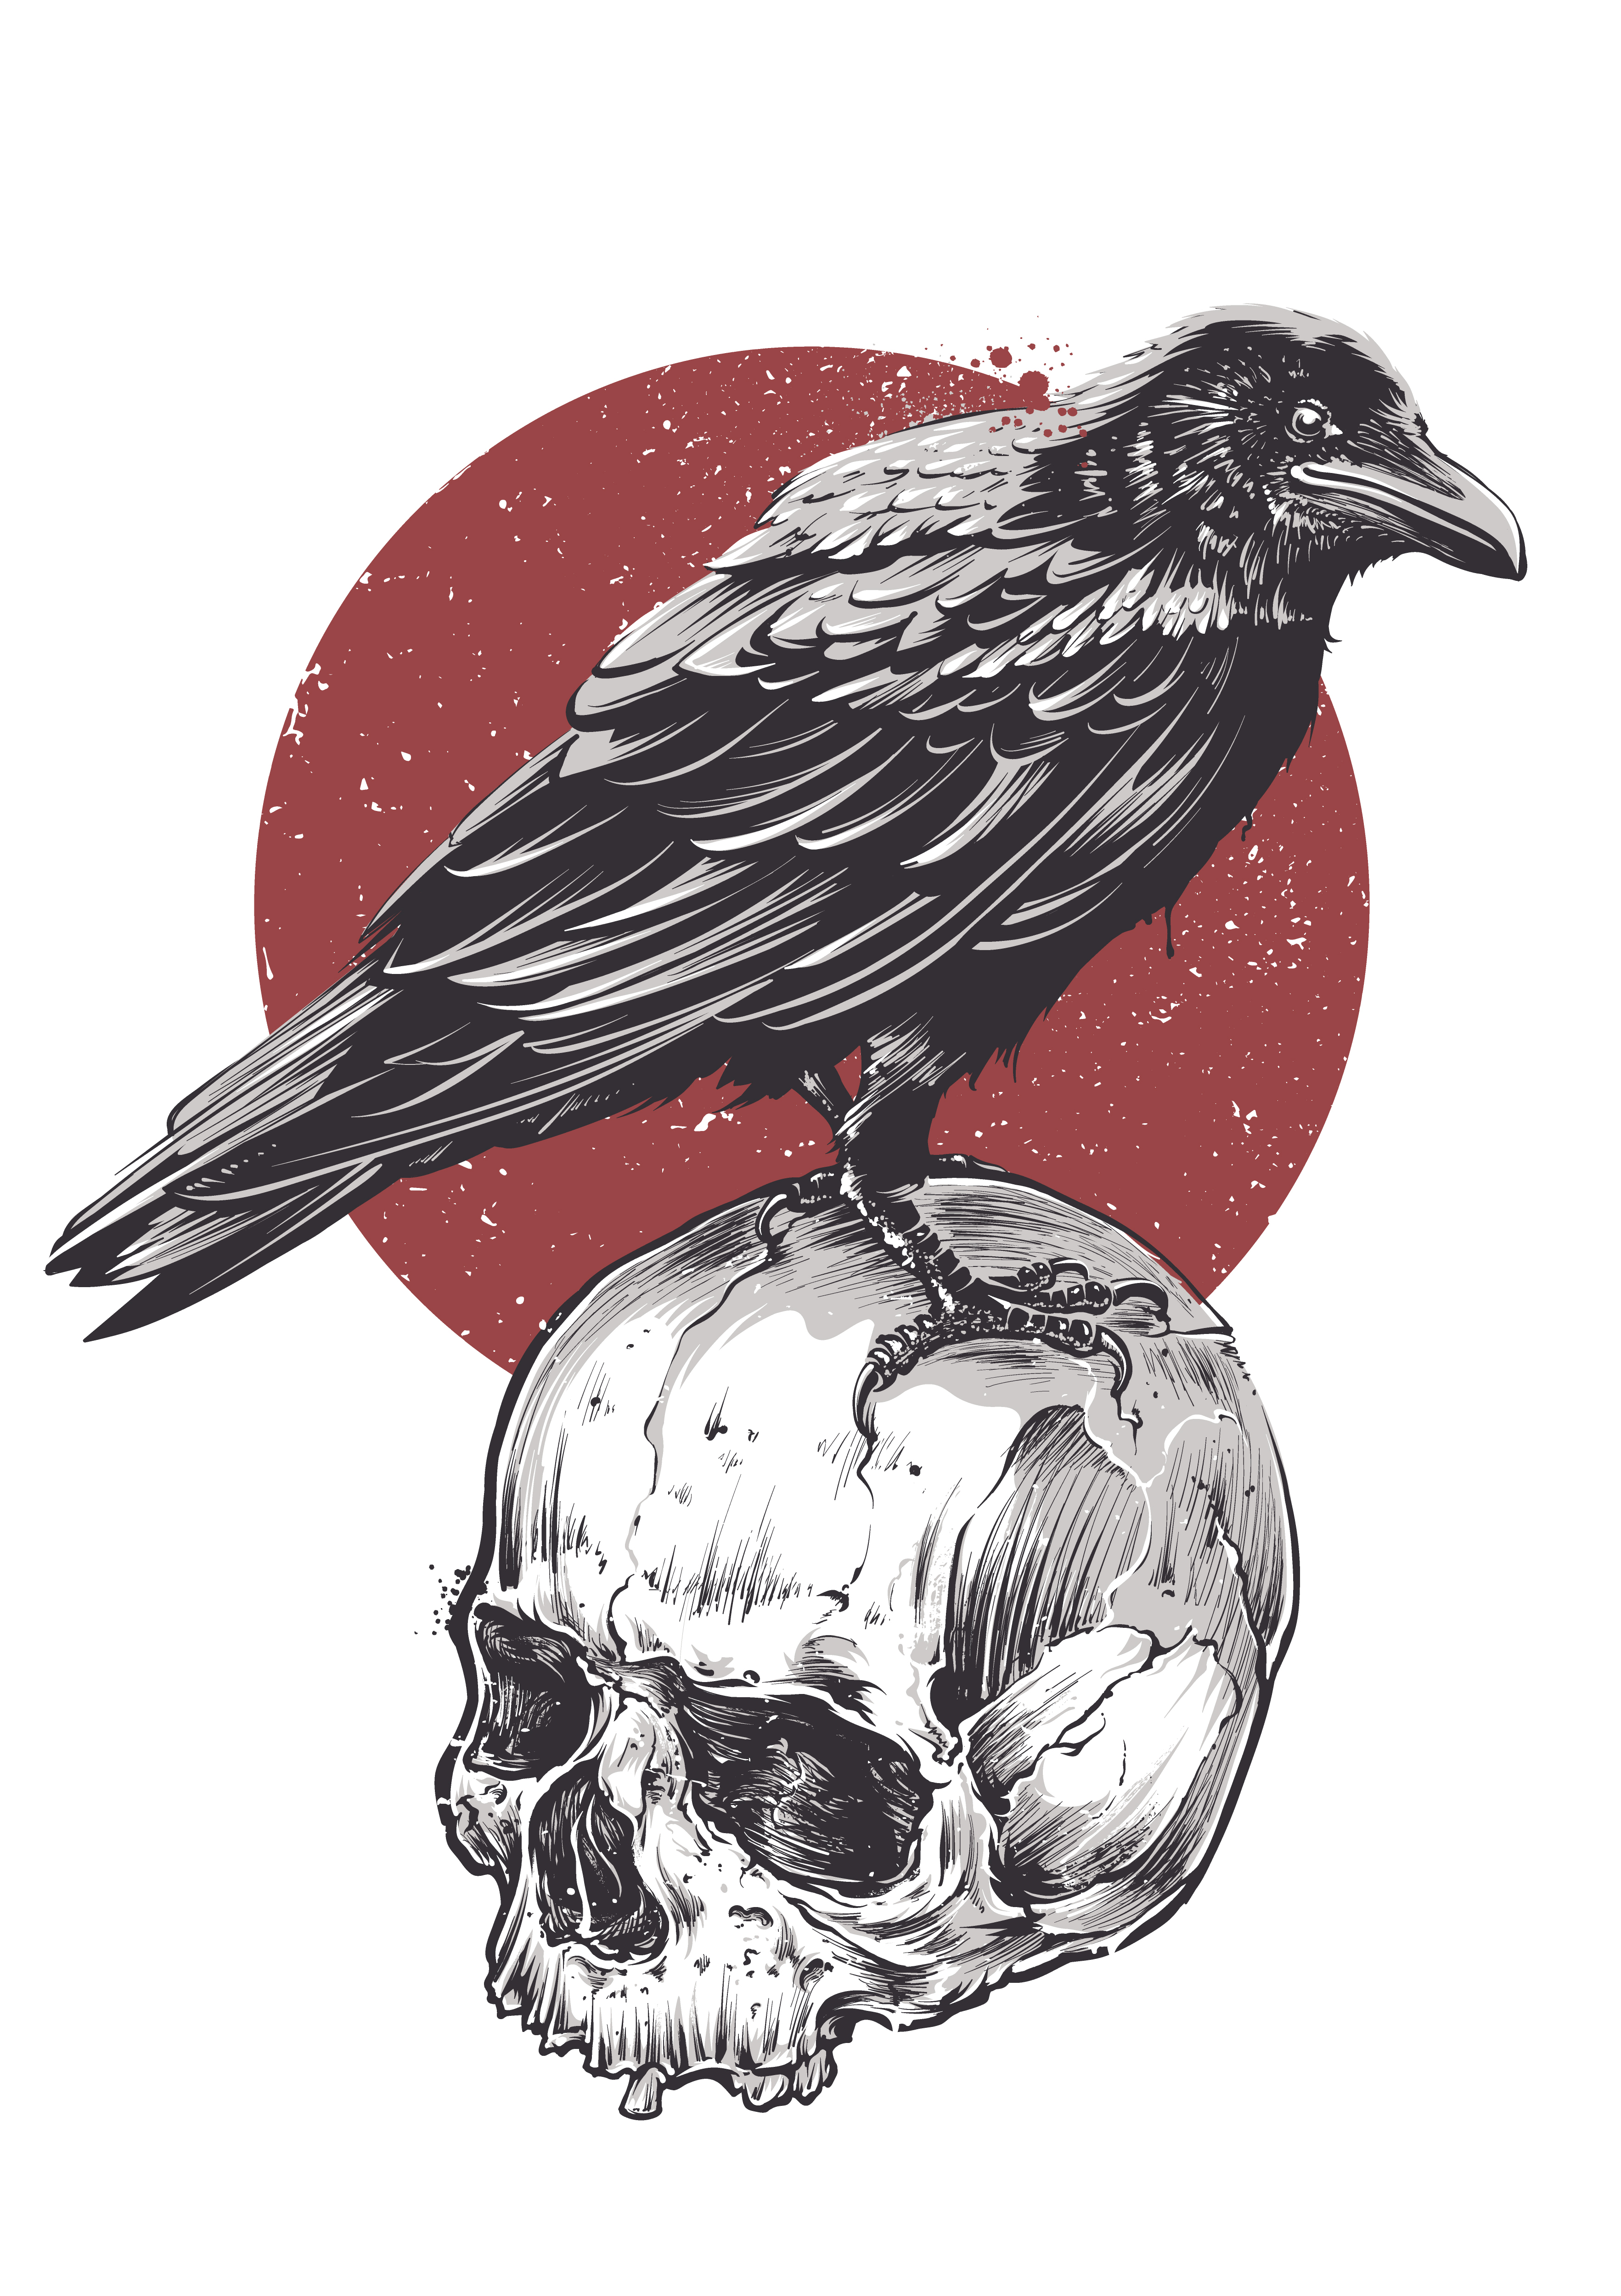 Download Raven on Skull - Download Free Vectors, Clipart Graphics & Vector Art